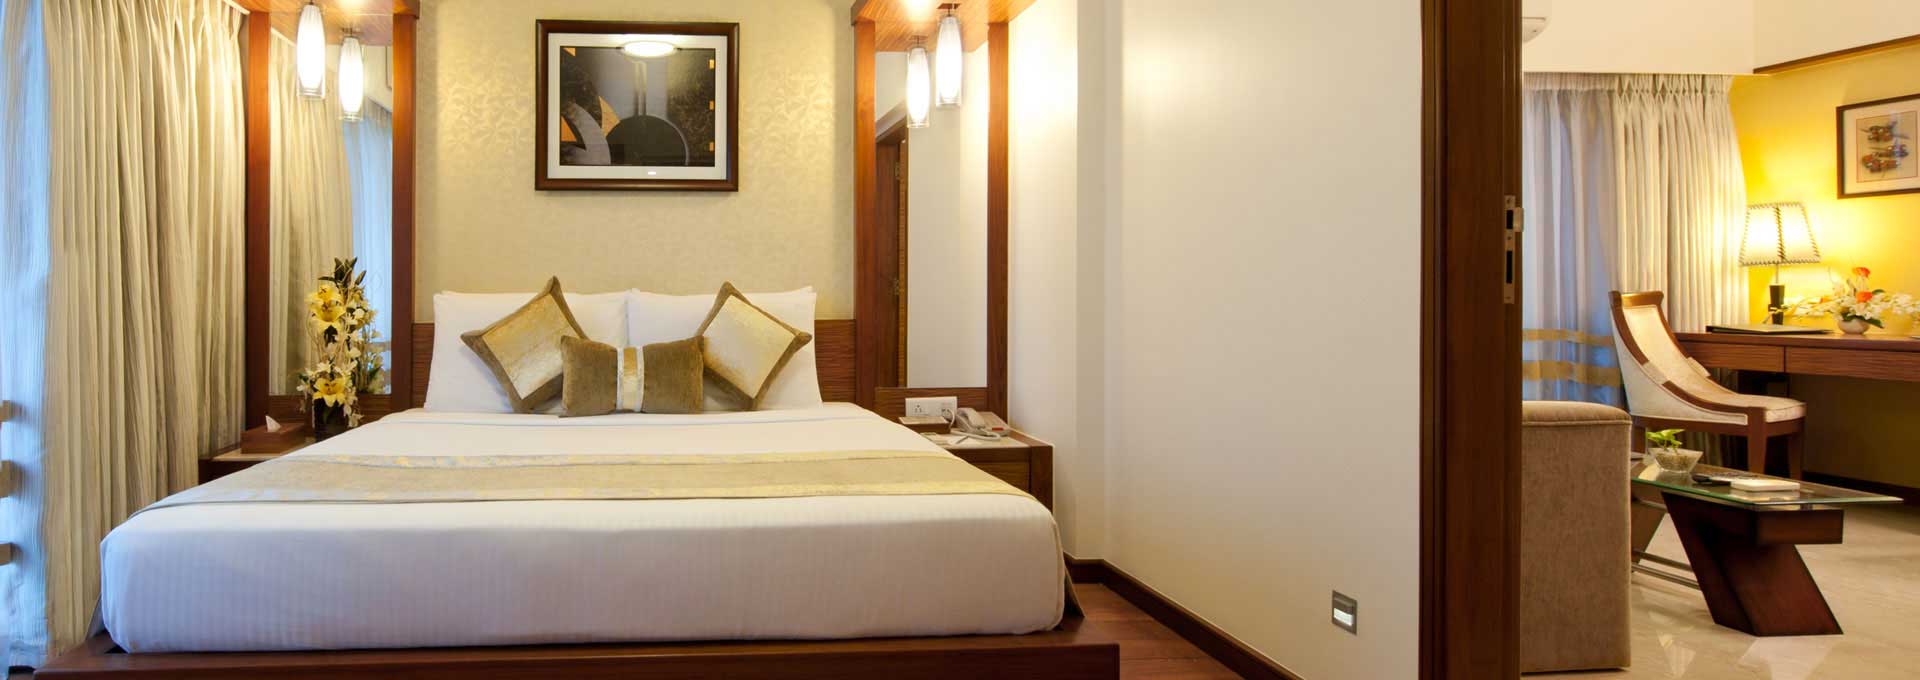 Bed & Breakfast Hotels in Mumbai